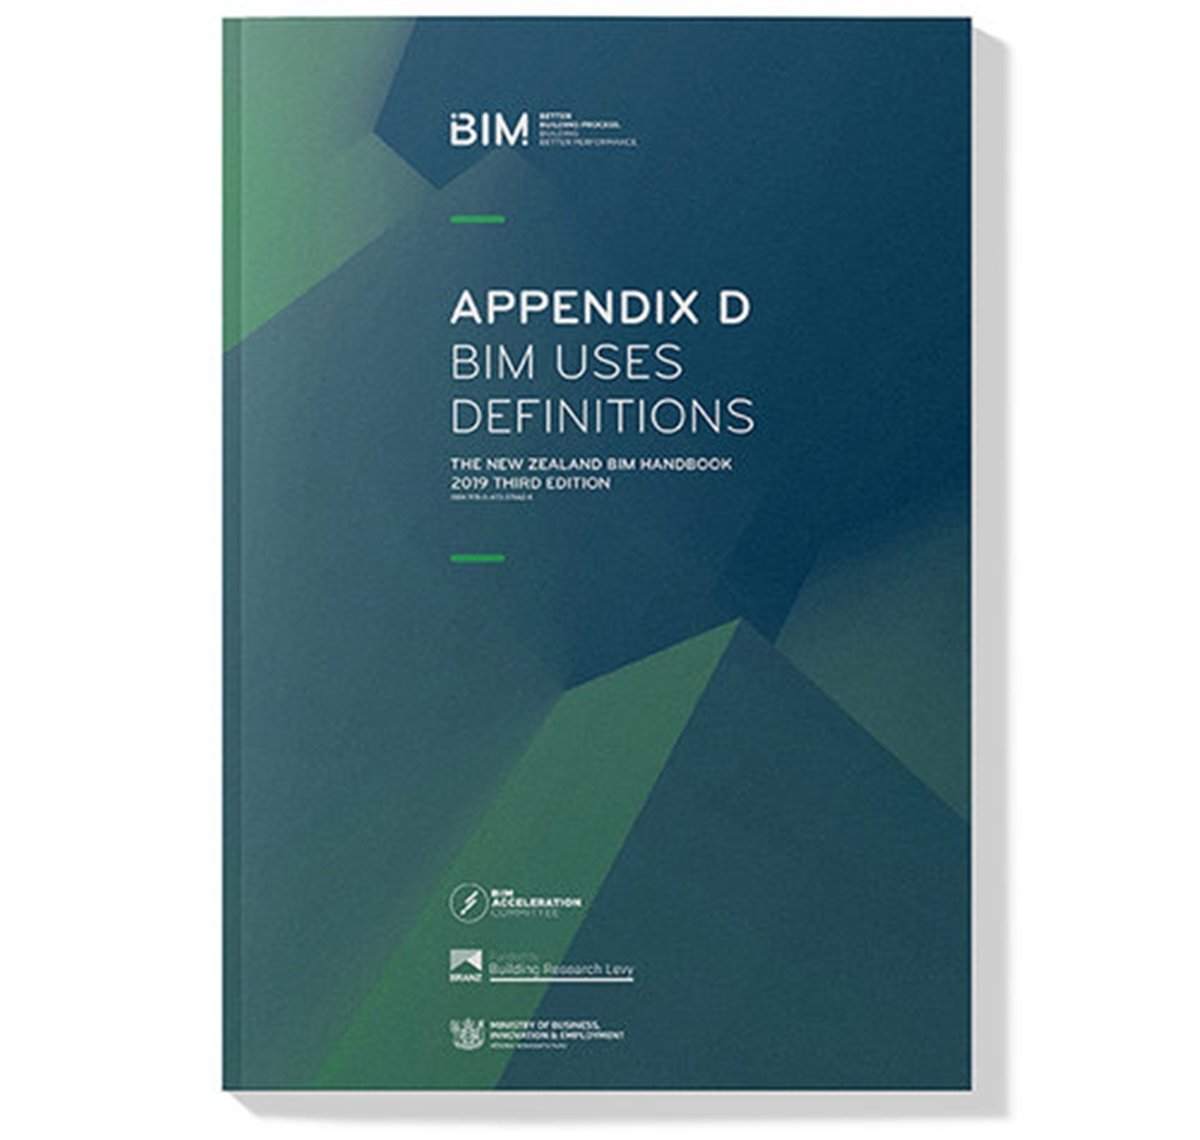 uAppendix D BIM Uses Definitionsv@oTFuThe New Zealand BIM Handbookv